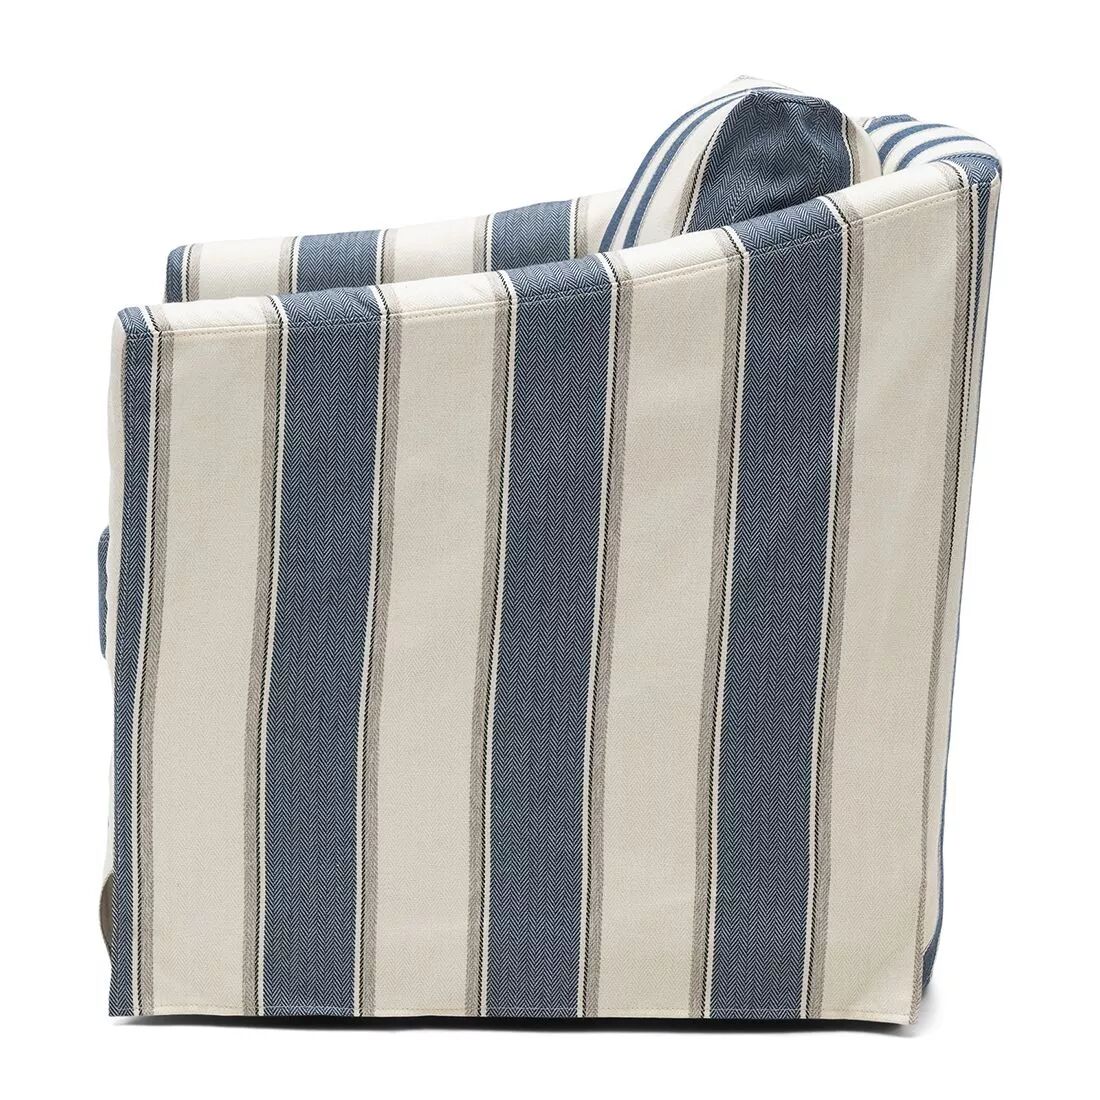 Fotel obrotowy Moretta 77x80x82cm striped weave blue stripe